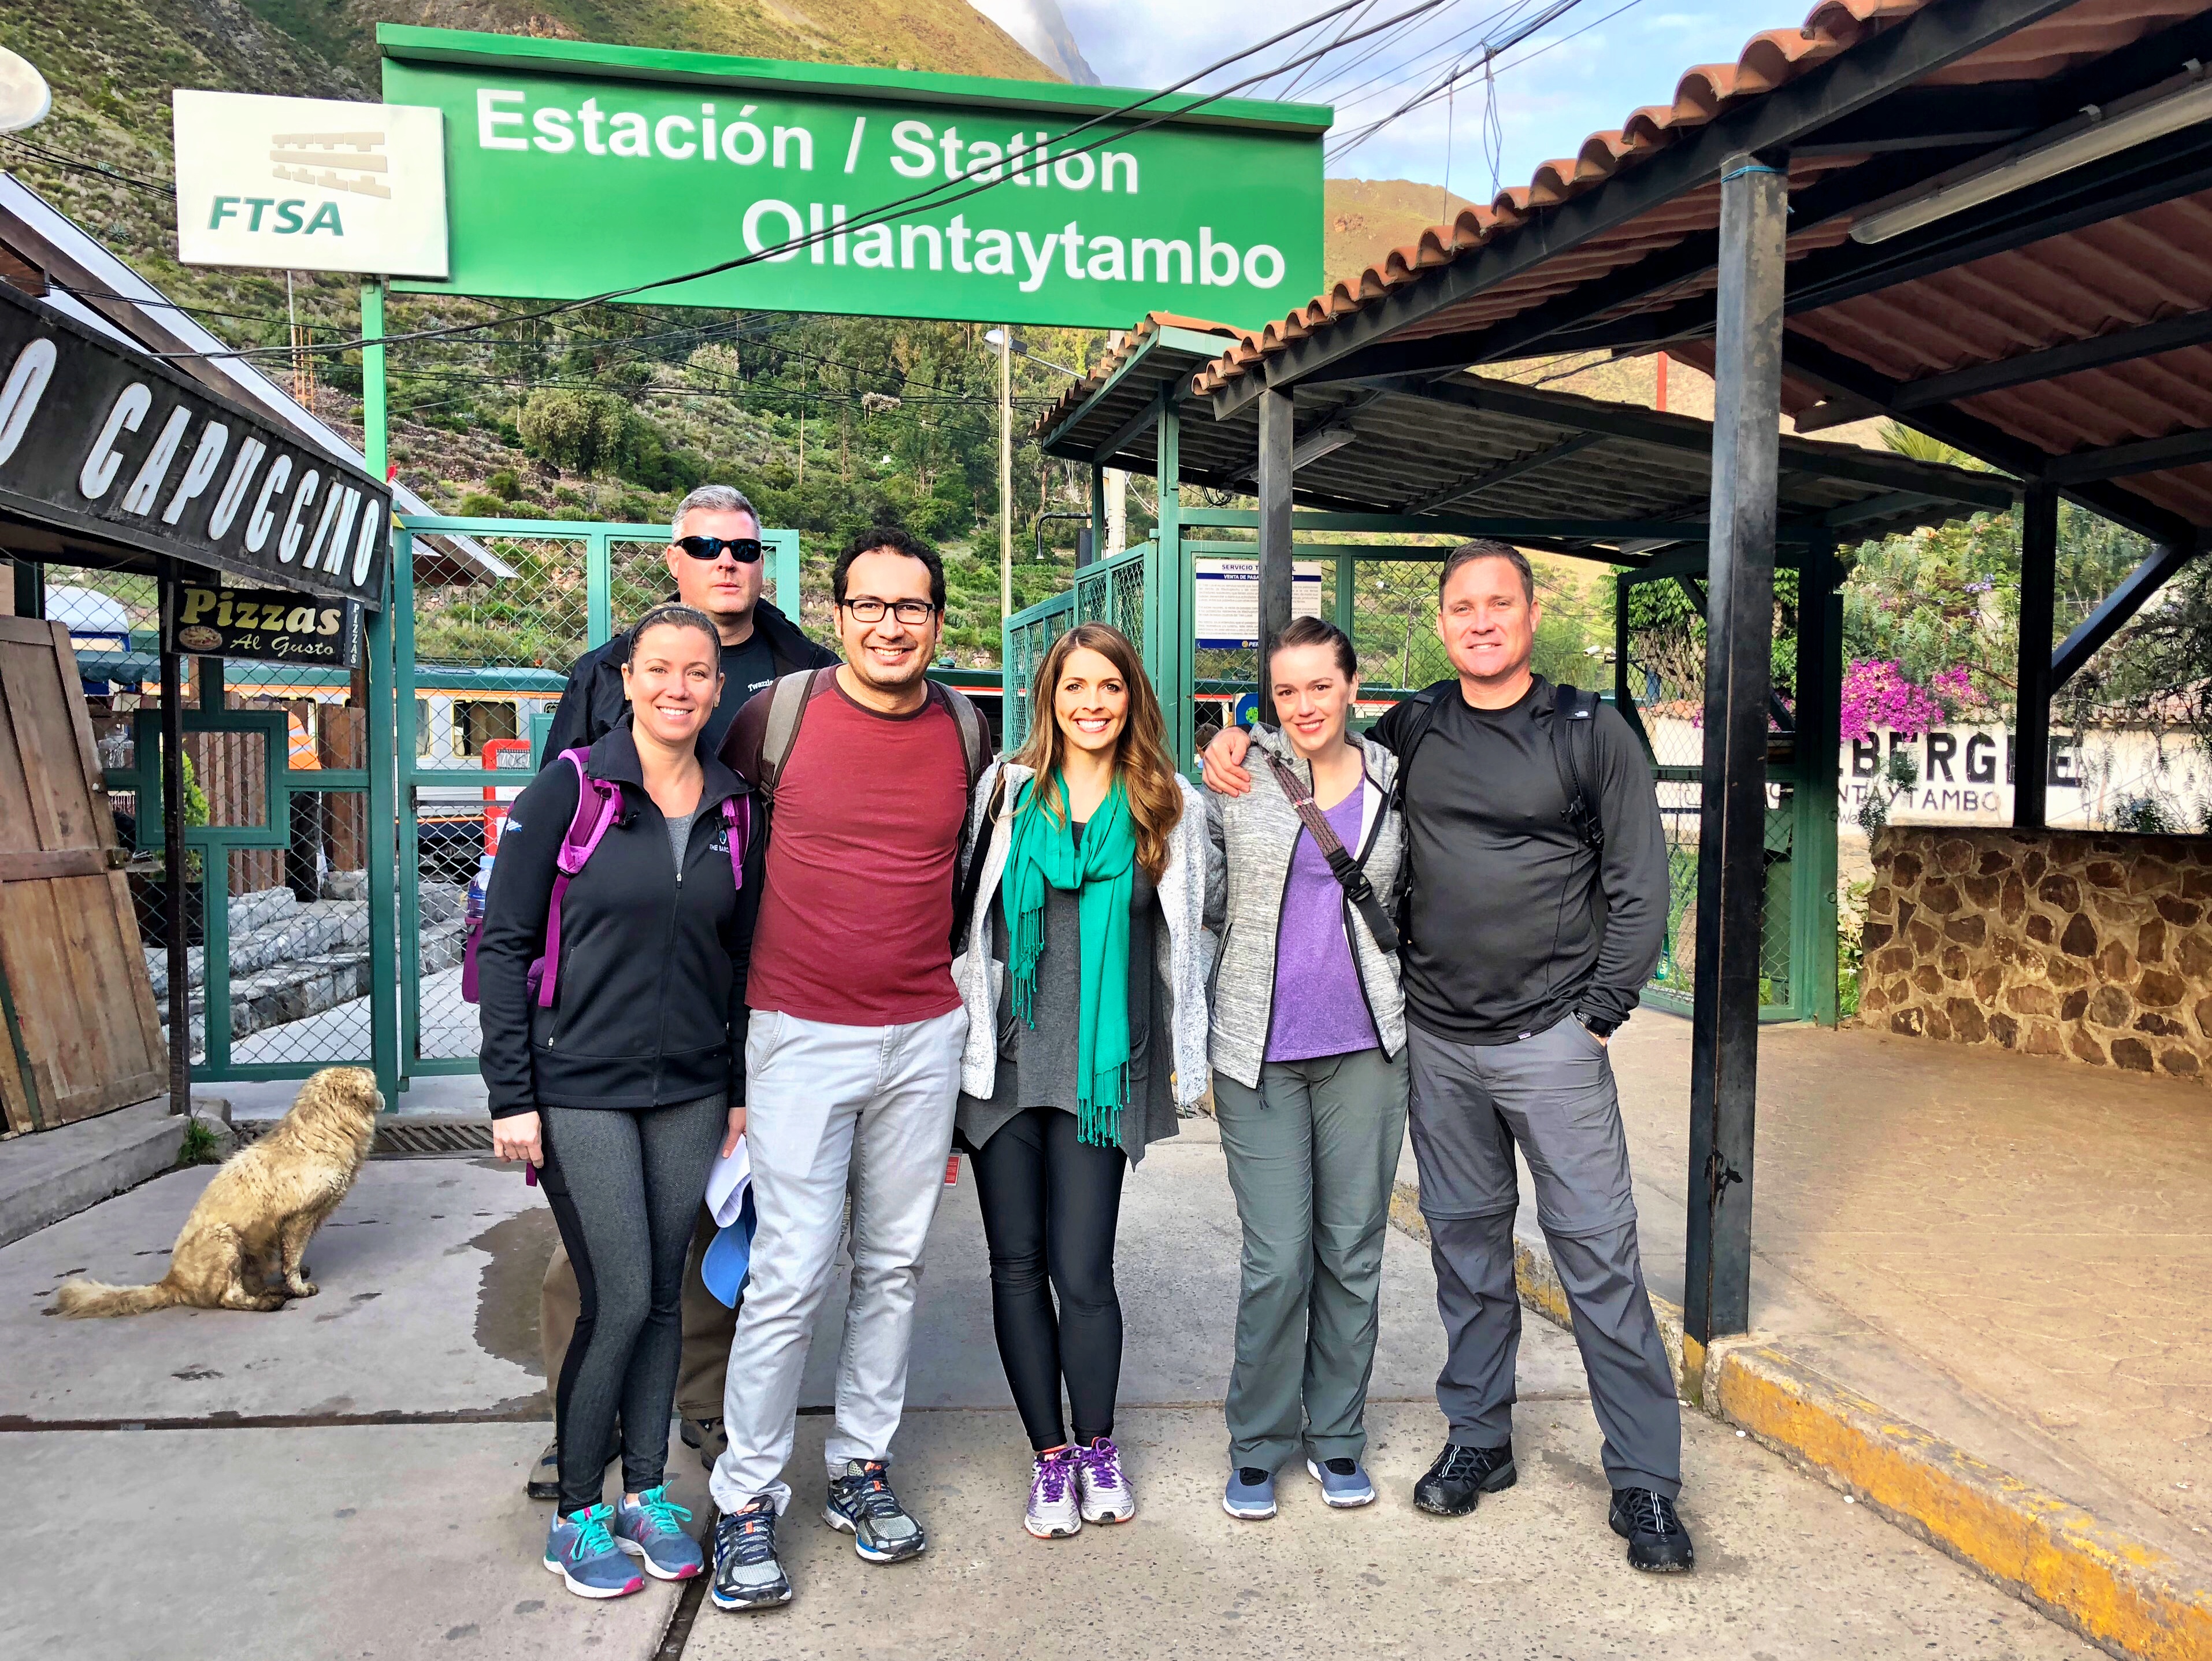 Ollantaytambo Station for the Train to Machu Picchu